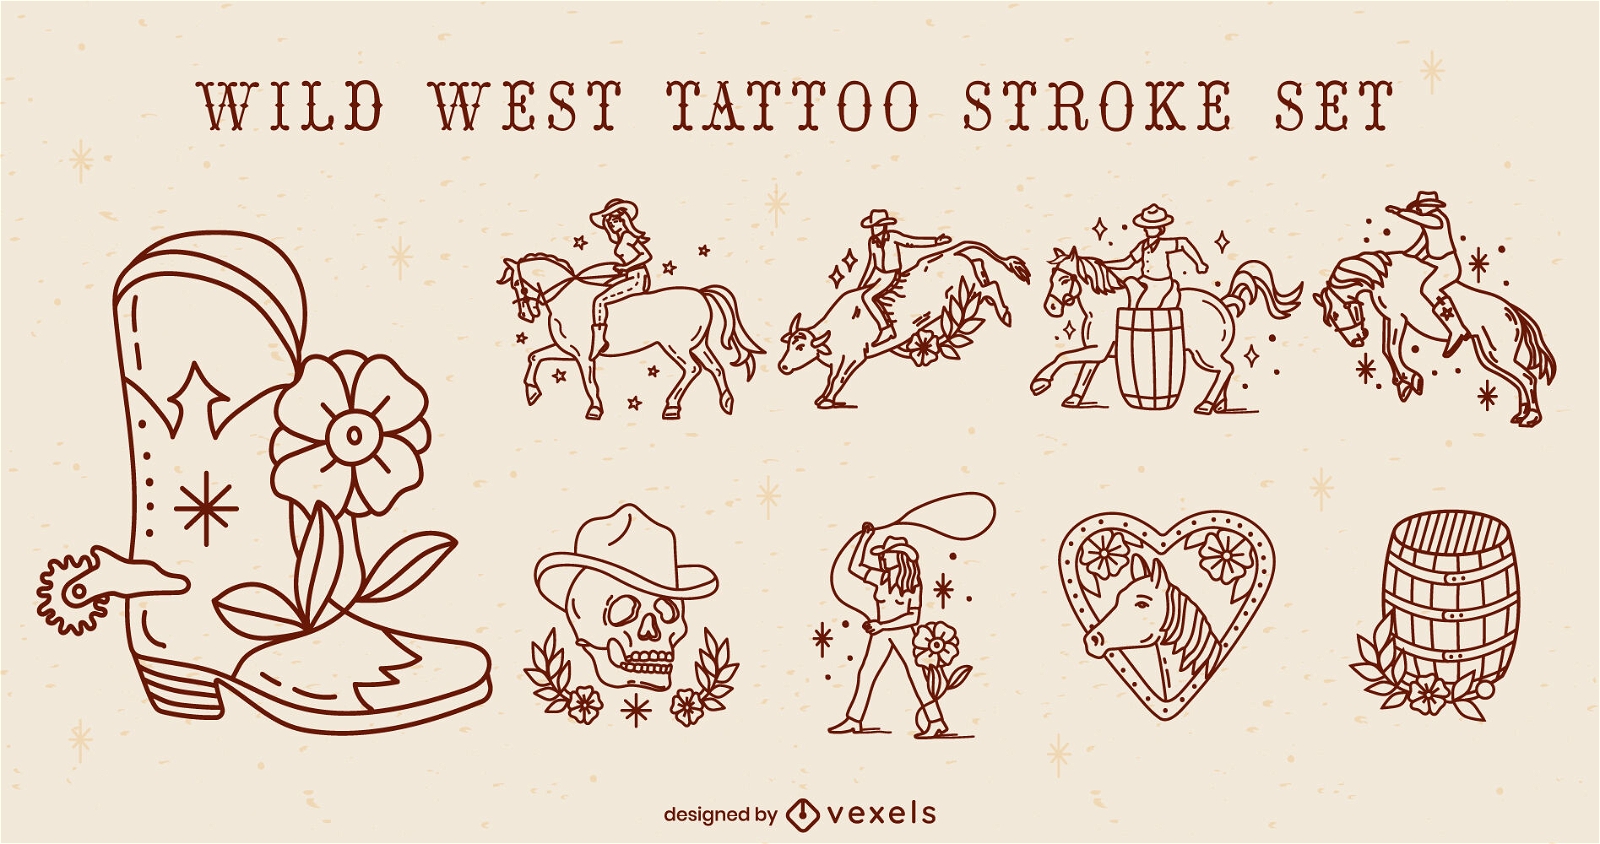 Cowboy wild west elements stroke set